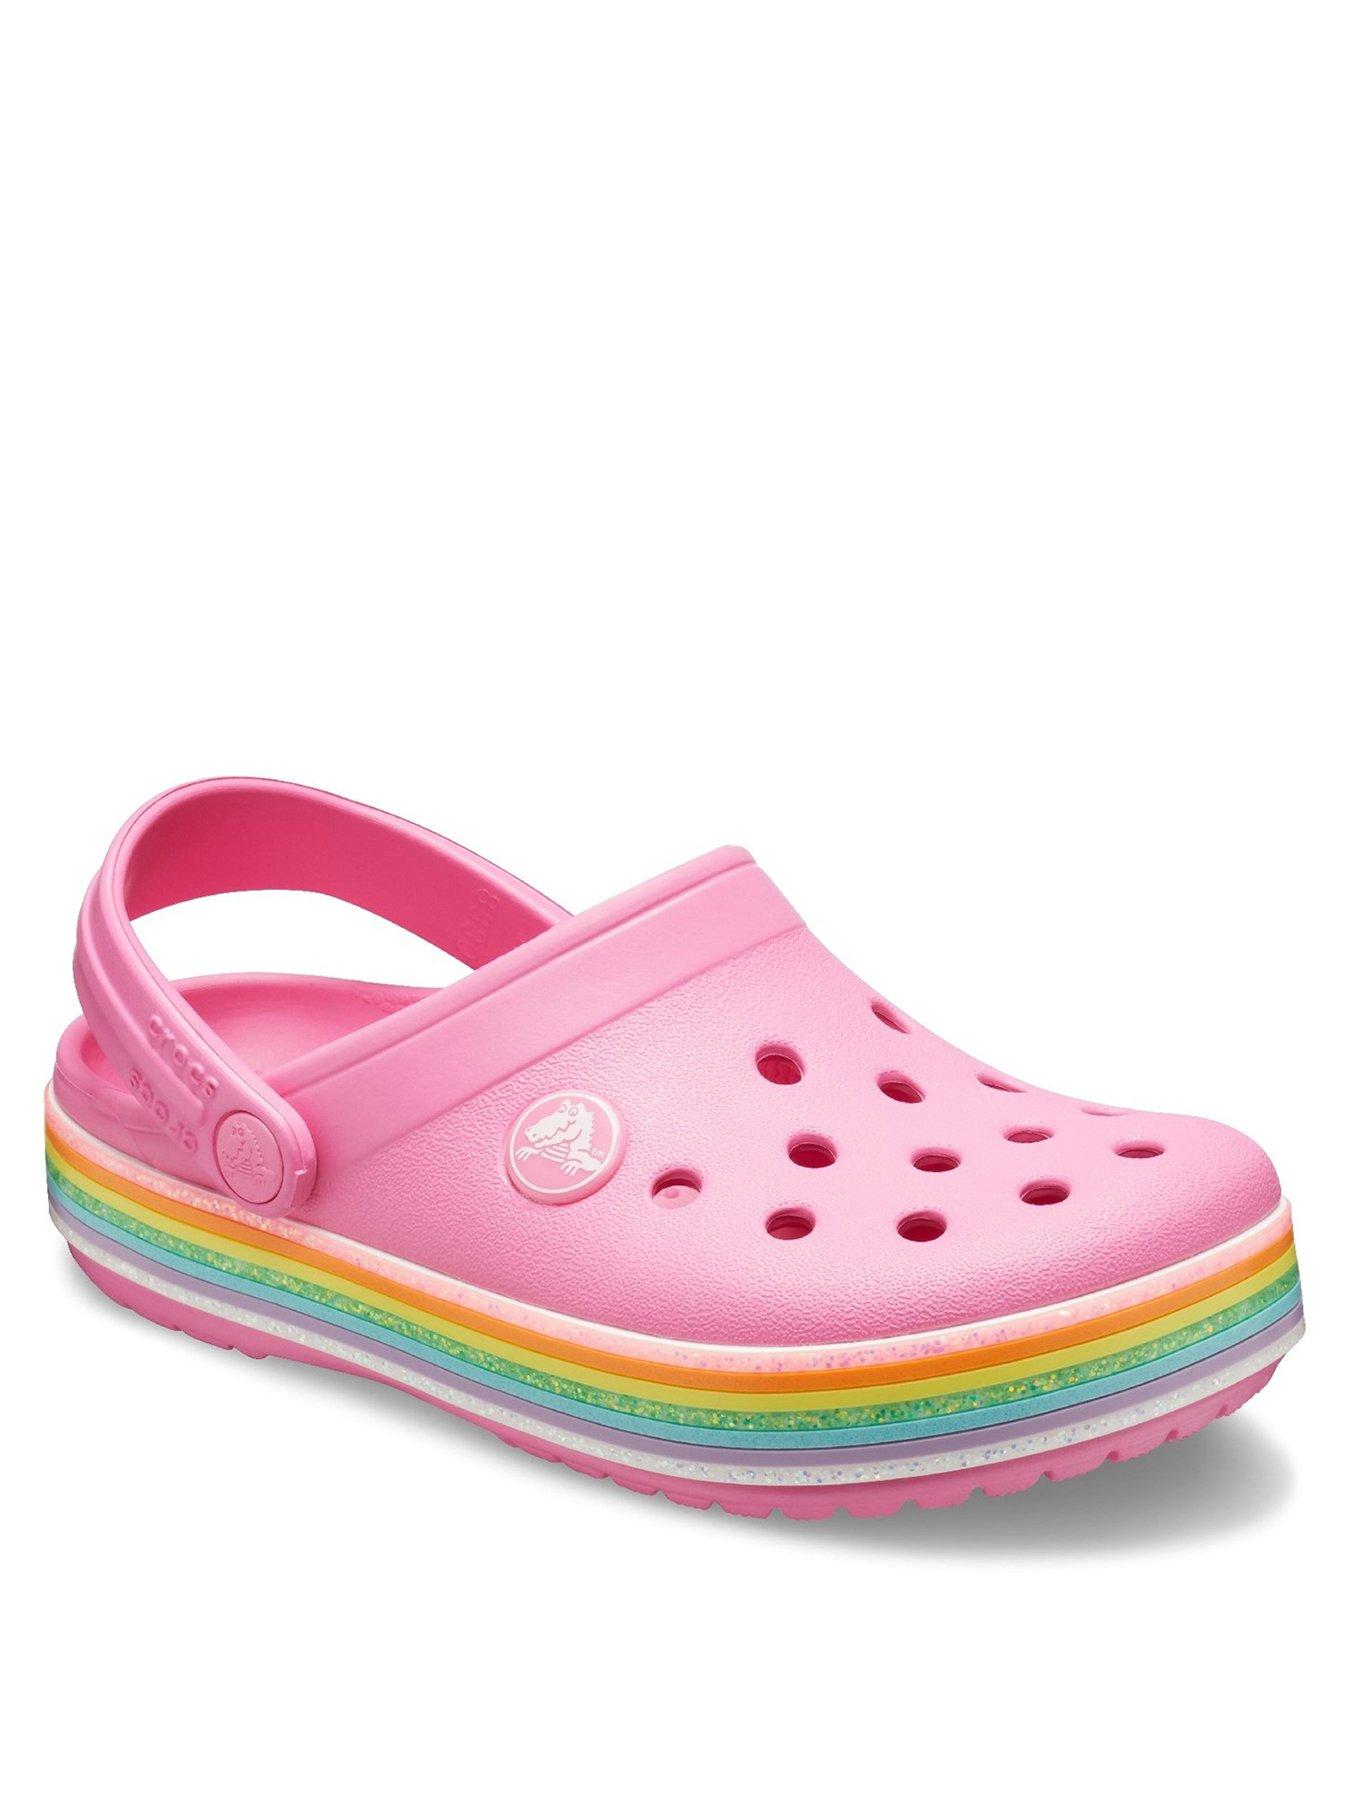 pink crocs size 13